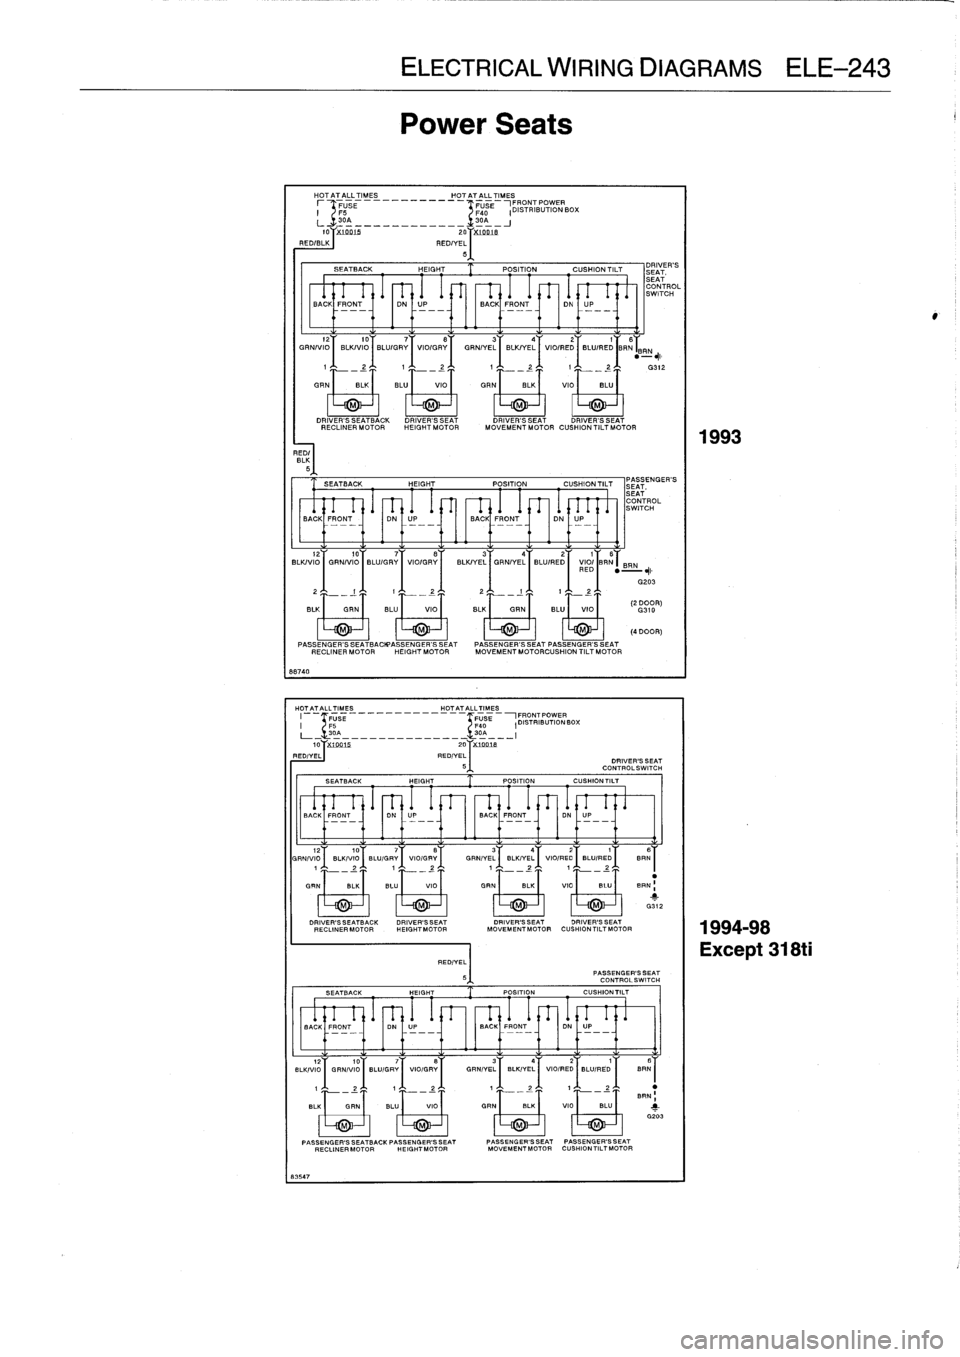 BMW 323i 1995 E36 Workshop Manual 
HOTATA_LL_TIM_E_S
________HO_TAT_AL
_
LT_IMES
FUSE

	

~~~jjj
```
FUSE

	

FRONT
POWER
F5

	

F40

	

I
DISTRIBUTION
BOX
IF

	

________
_
30A
-J
10
XLDQLS

	

20Y
XI0018
RED/BLK

	

RED/VEL
5

GRNI